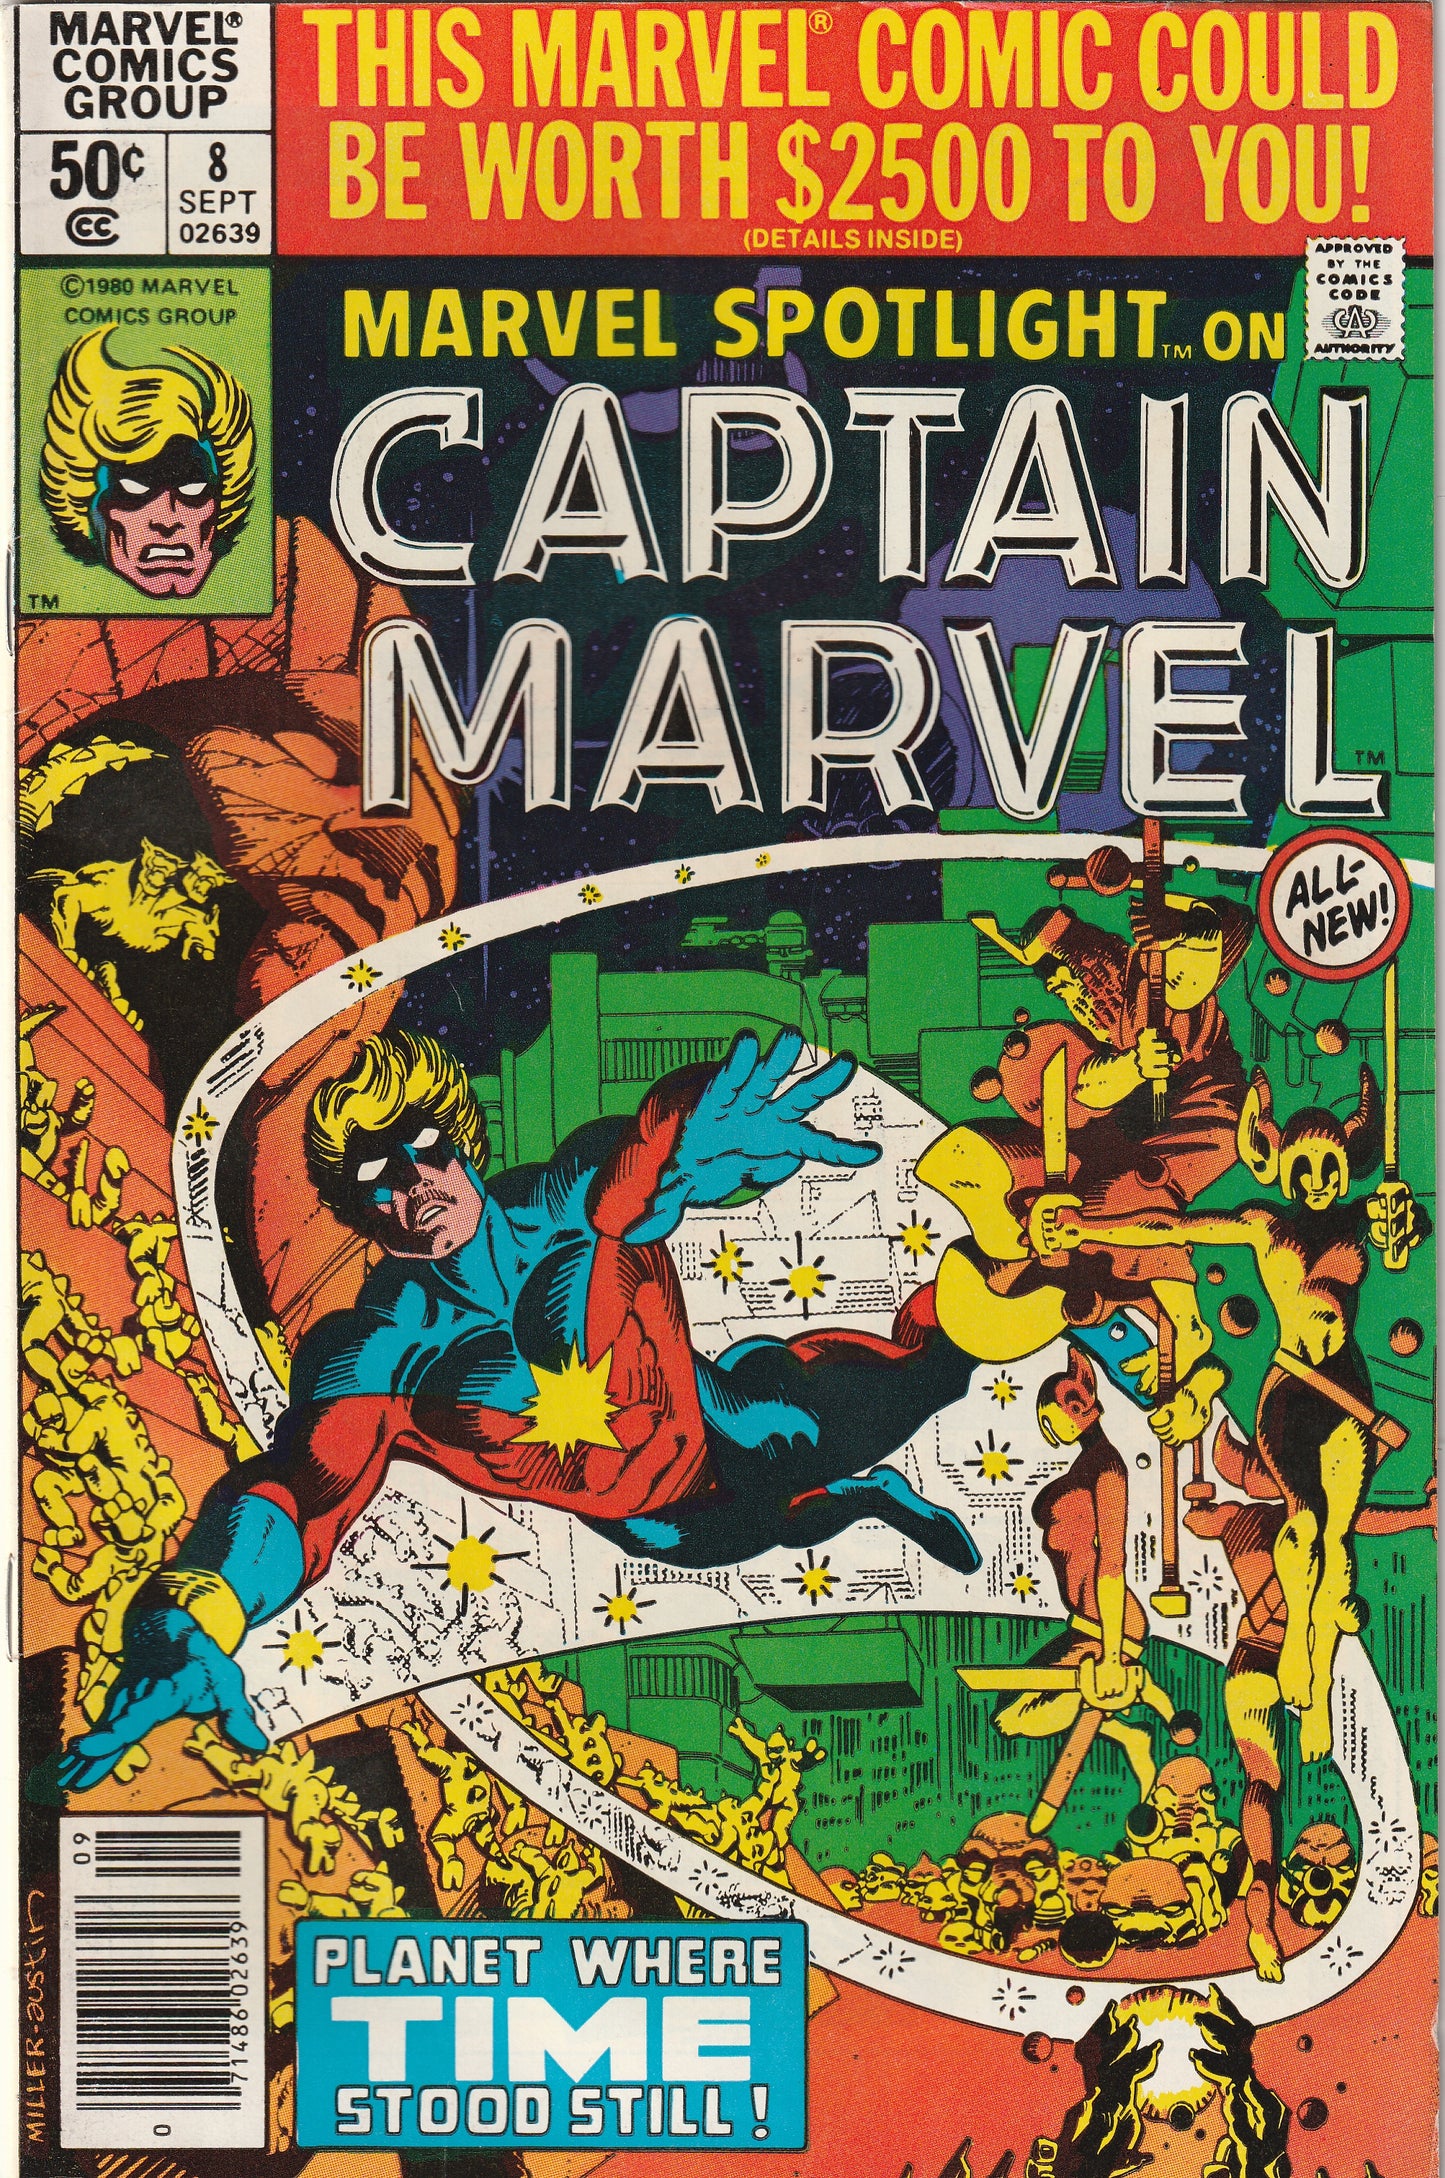 Marvel Spotlight Volume 2 #8 (1980) Captain Marvel - Frank Miller cover & pencils